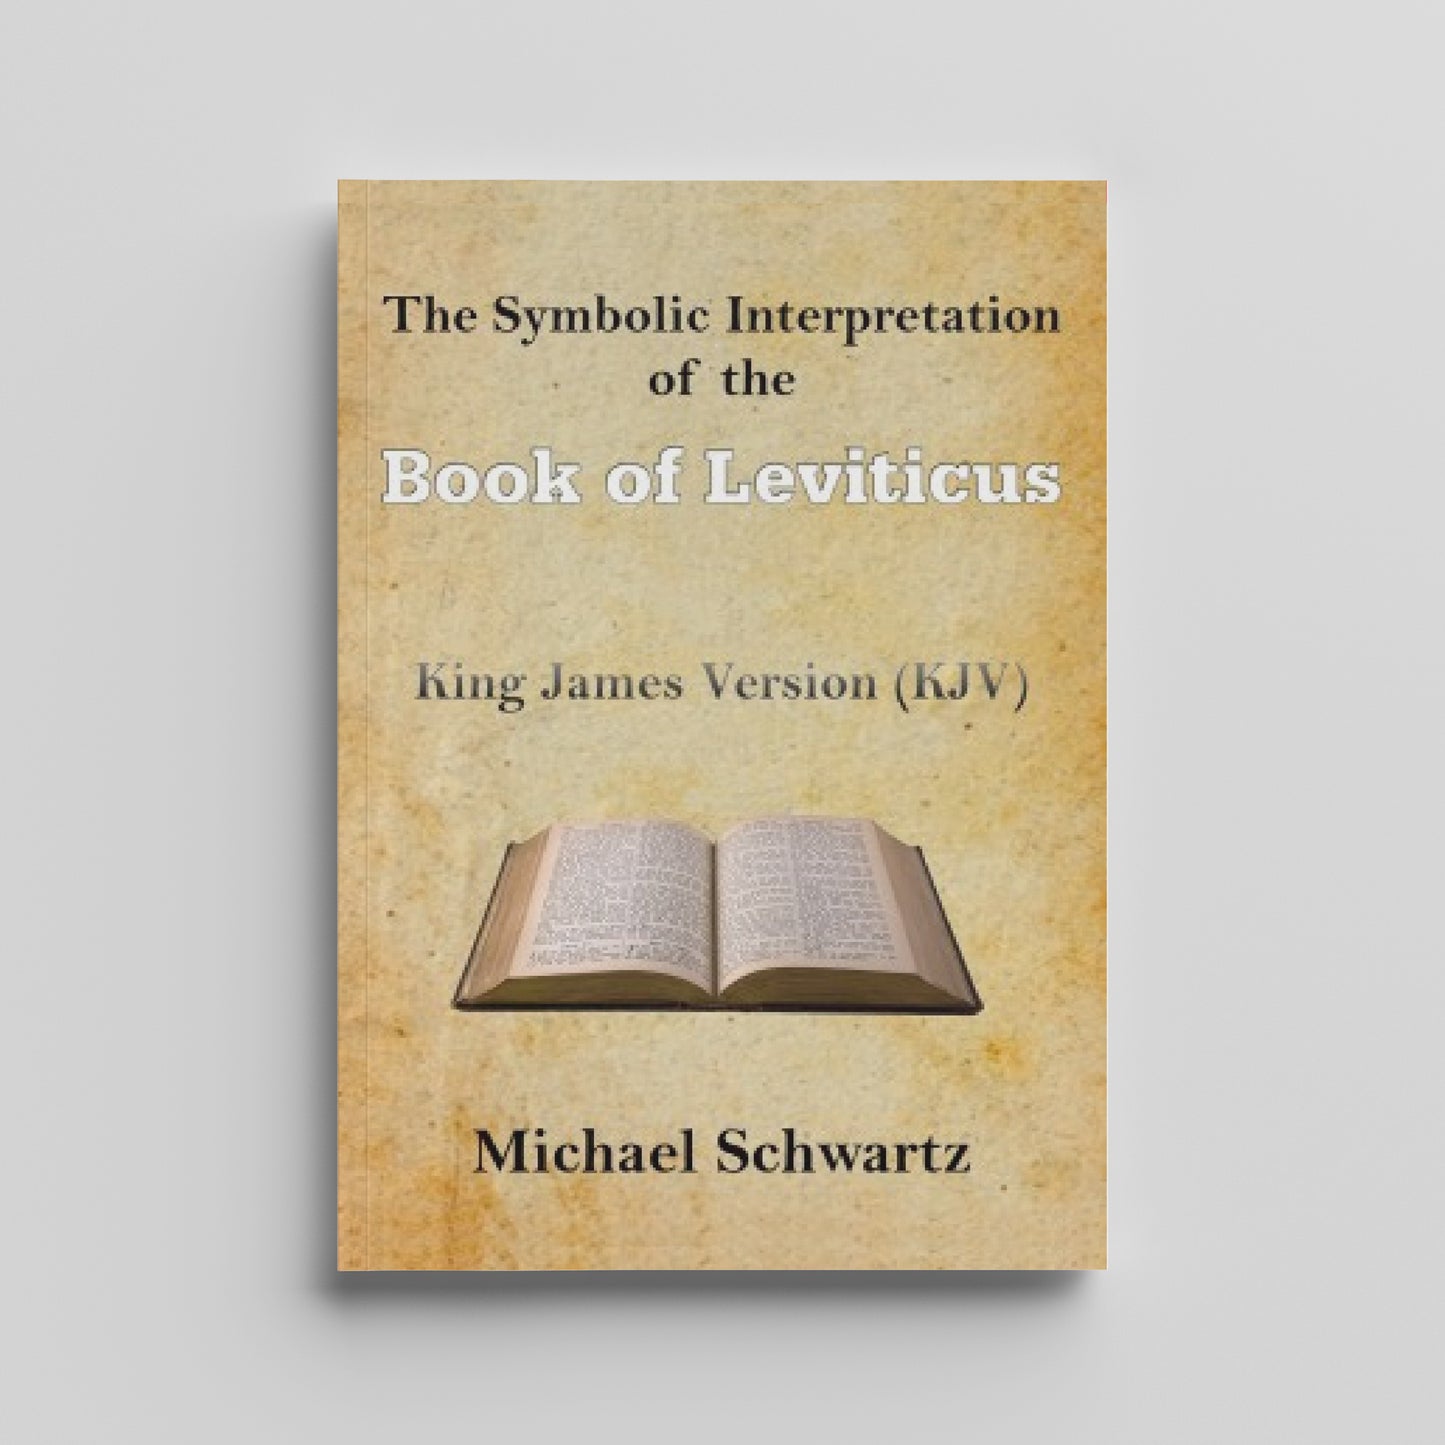 The Symbolic Interpretation of the Book of Leviticus